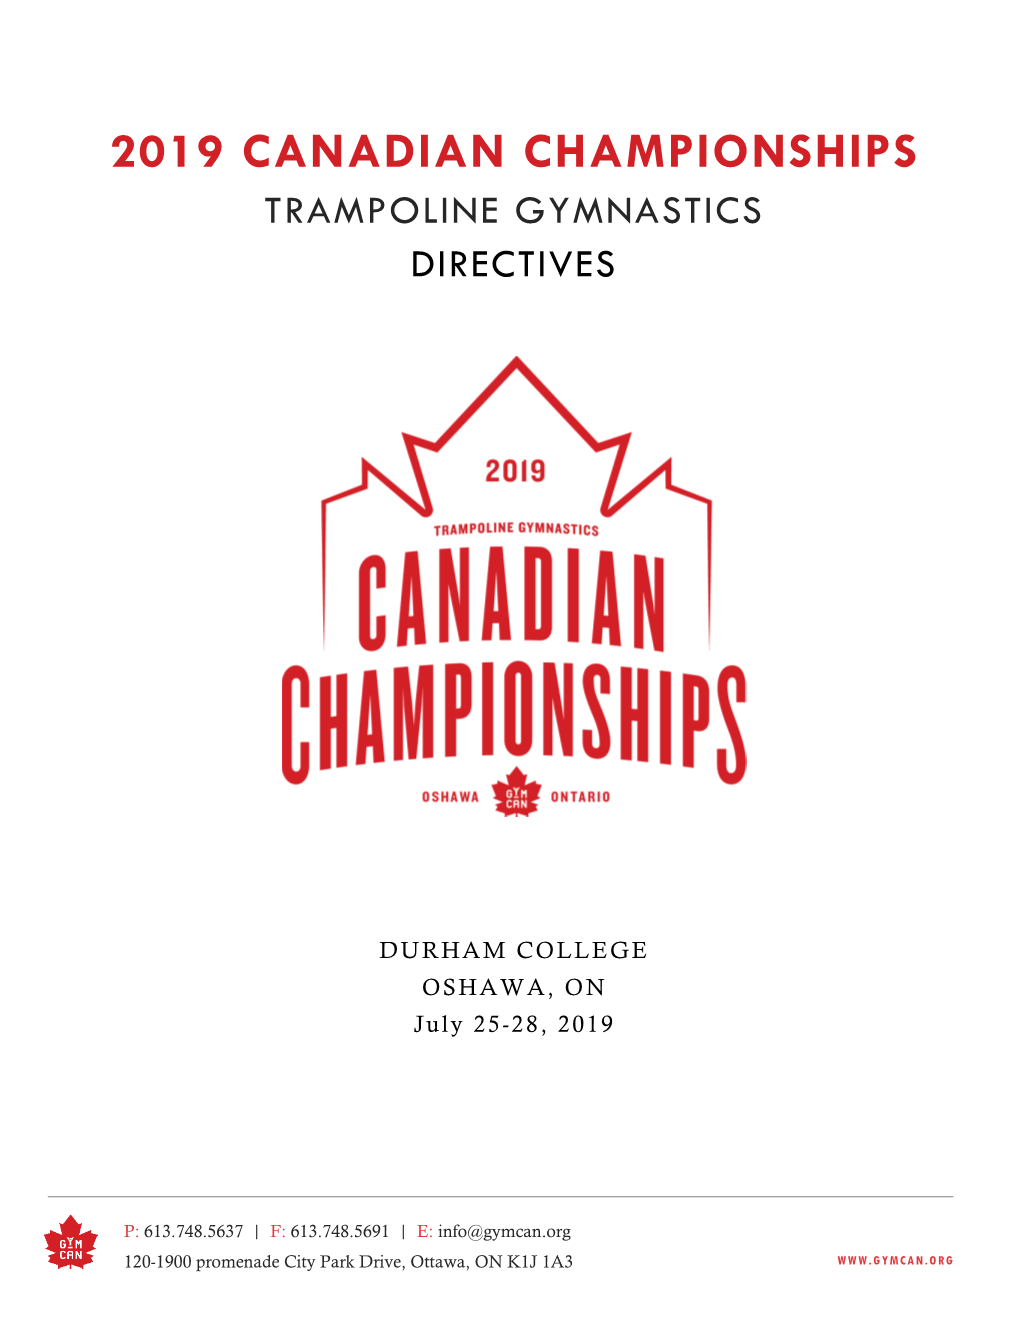 2019 Canadian Championships Trampoline Gymnastics Directives